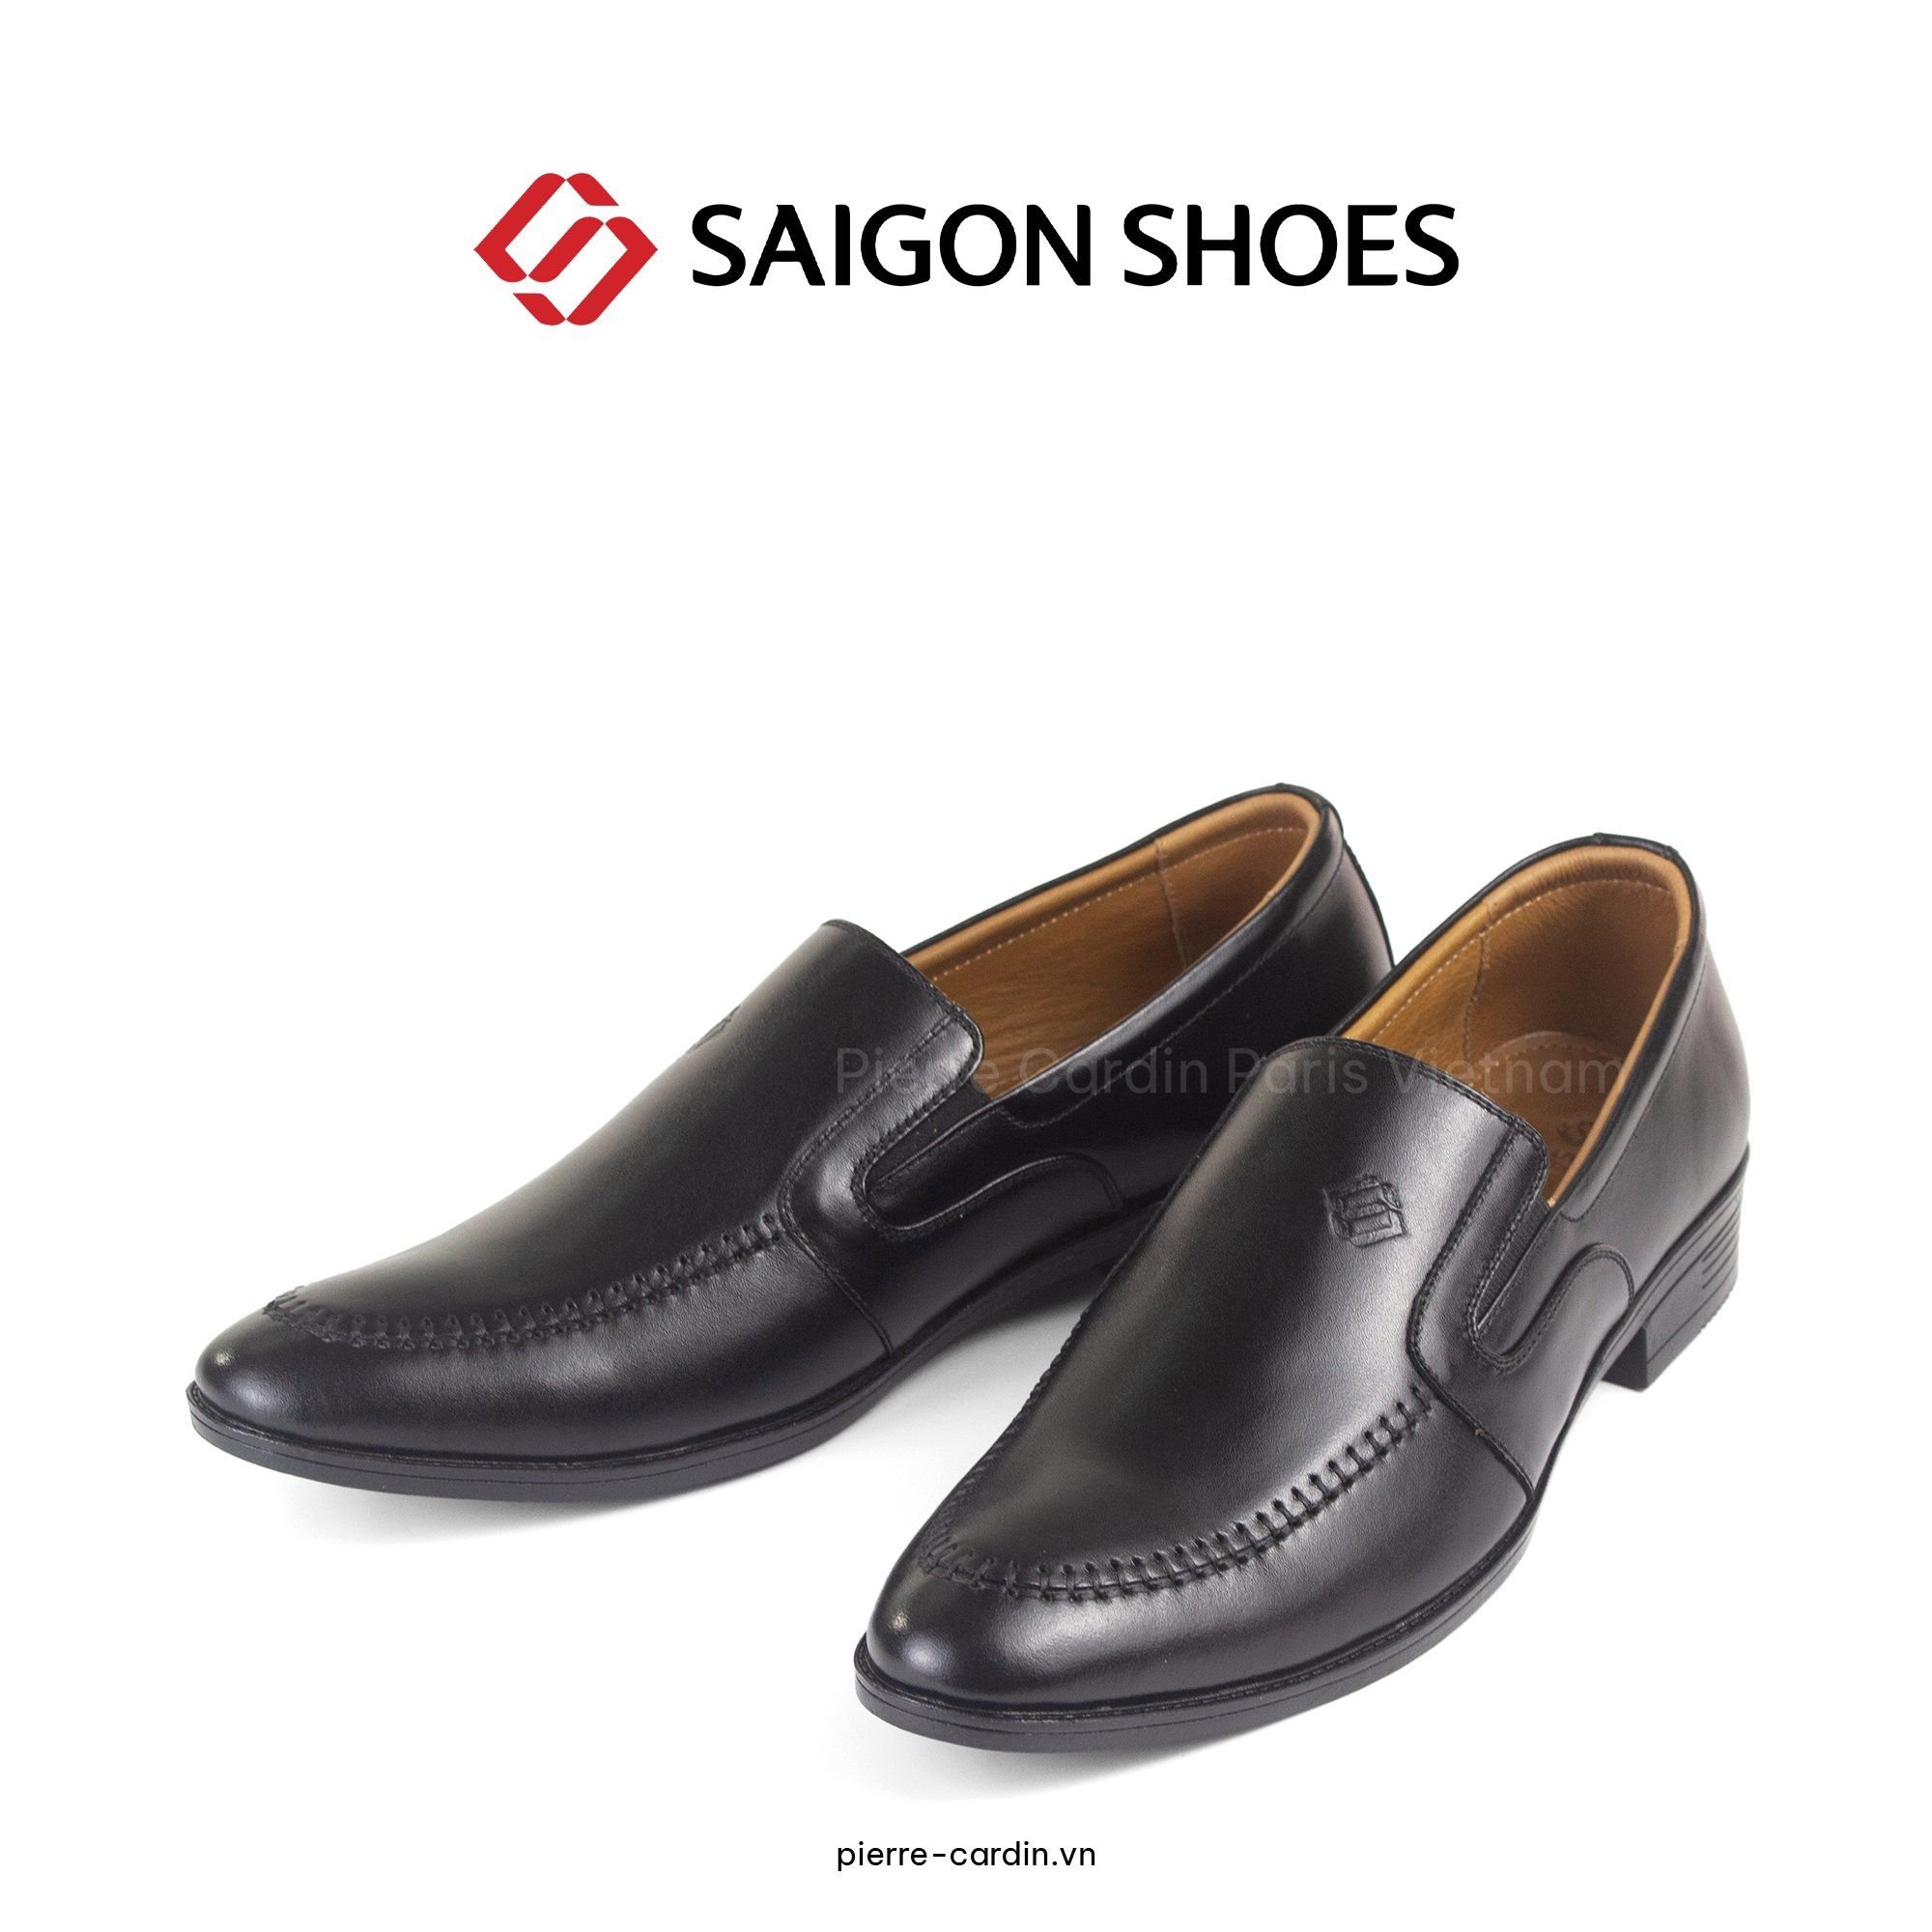 Pierre Cardin Paris Vietnam: Giày Lười Saigon Shoes - SGMFWLH 004 (BLACK)